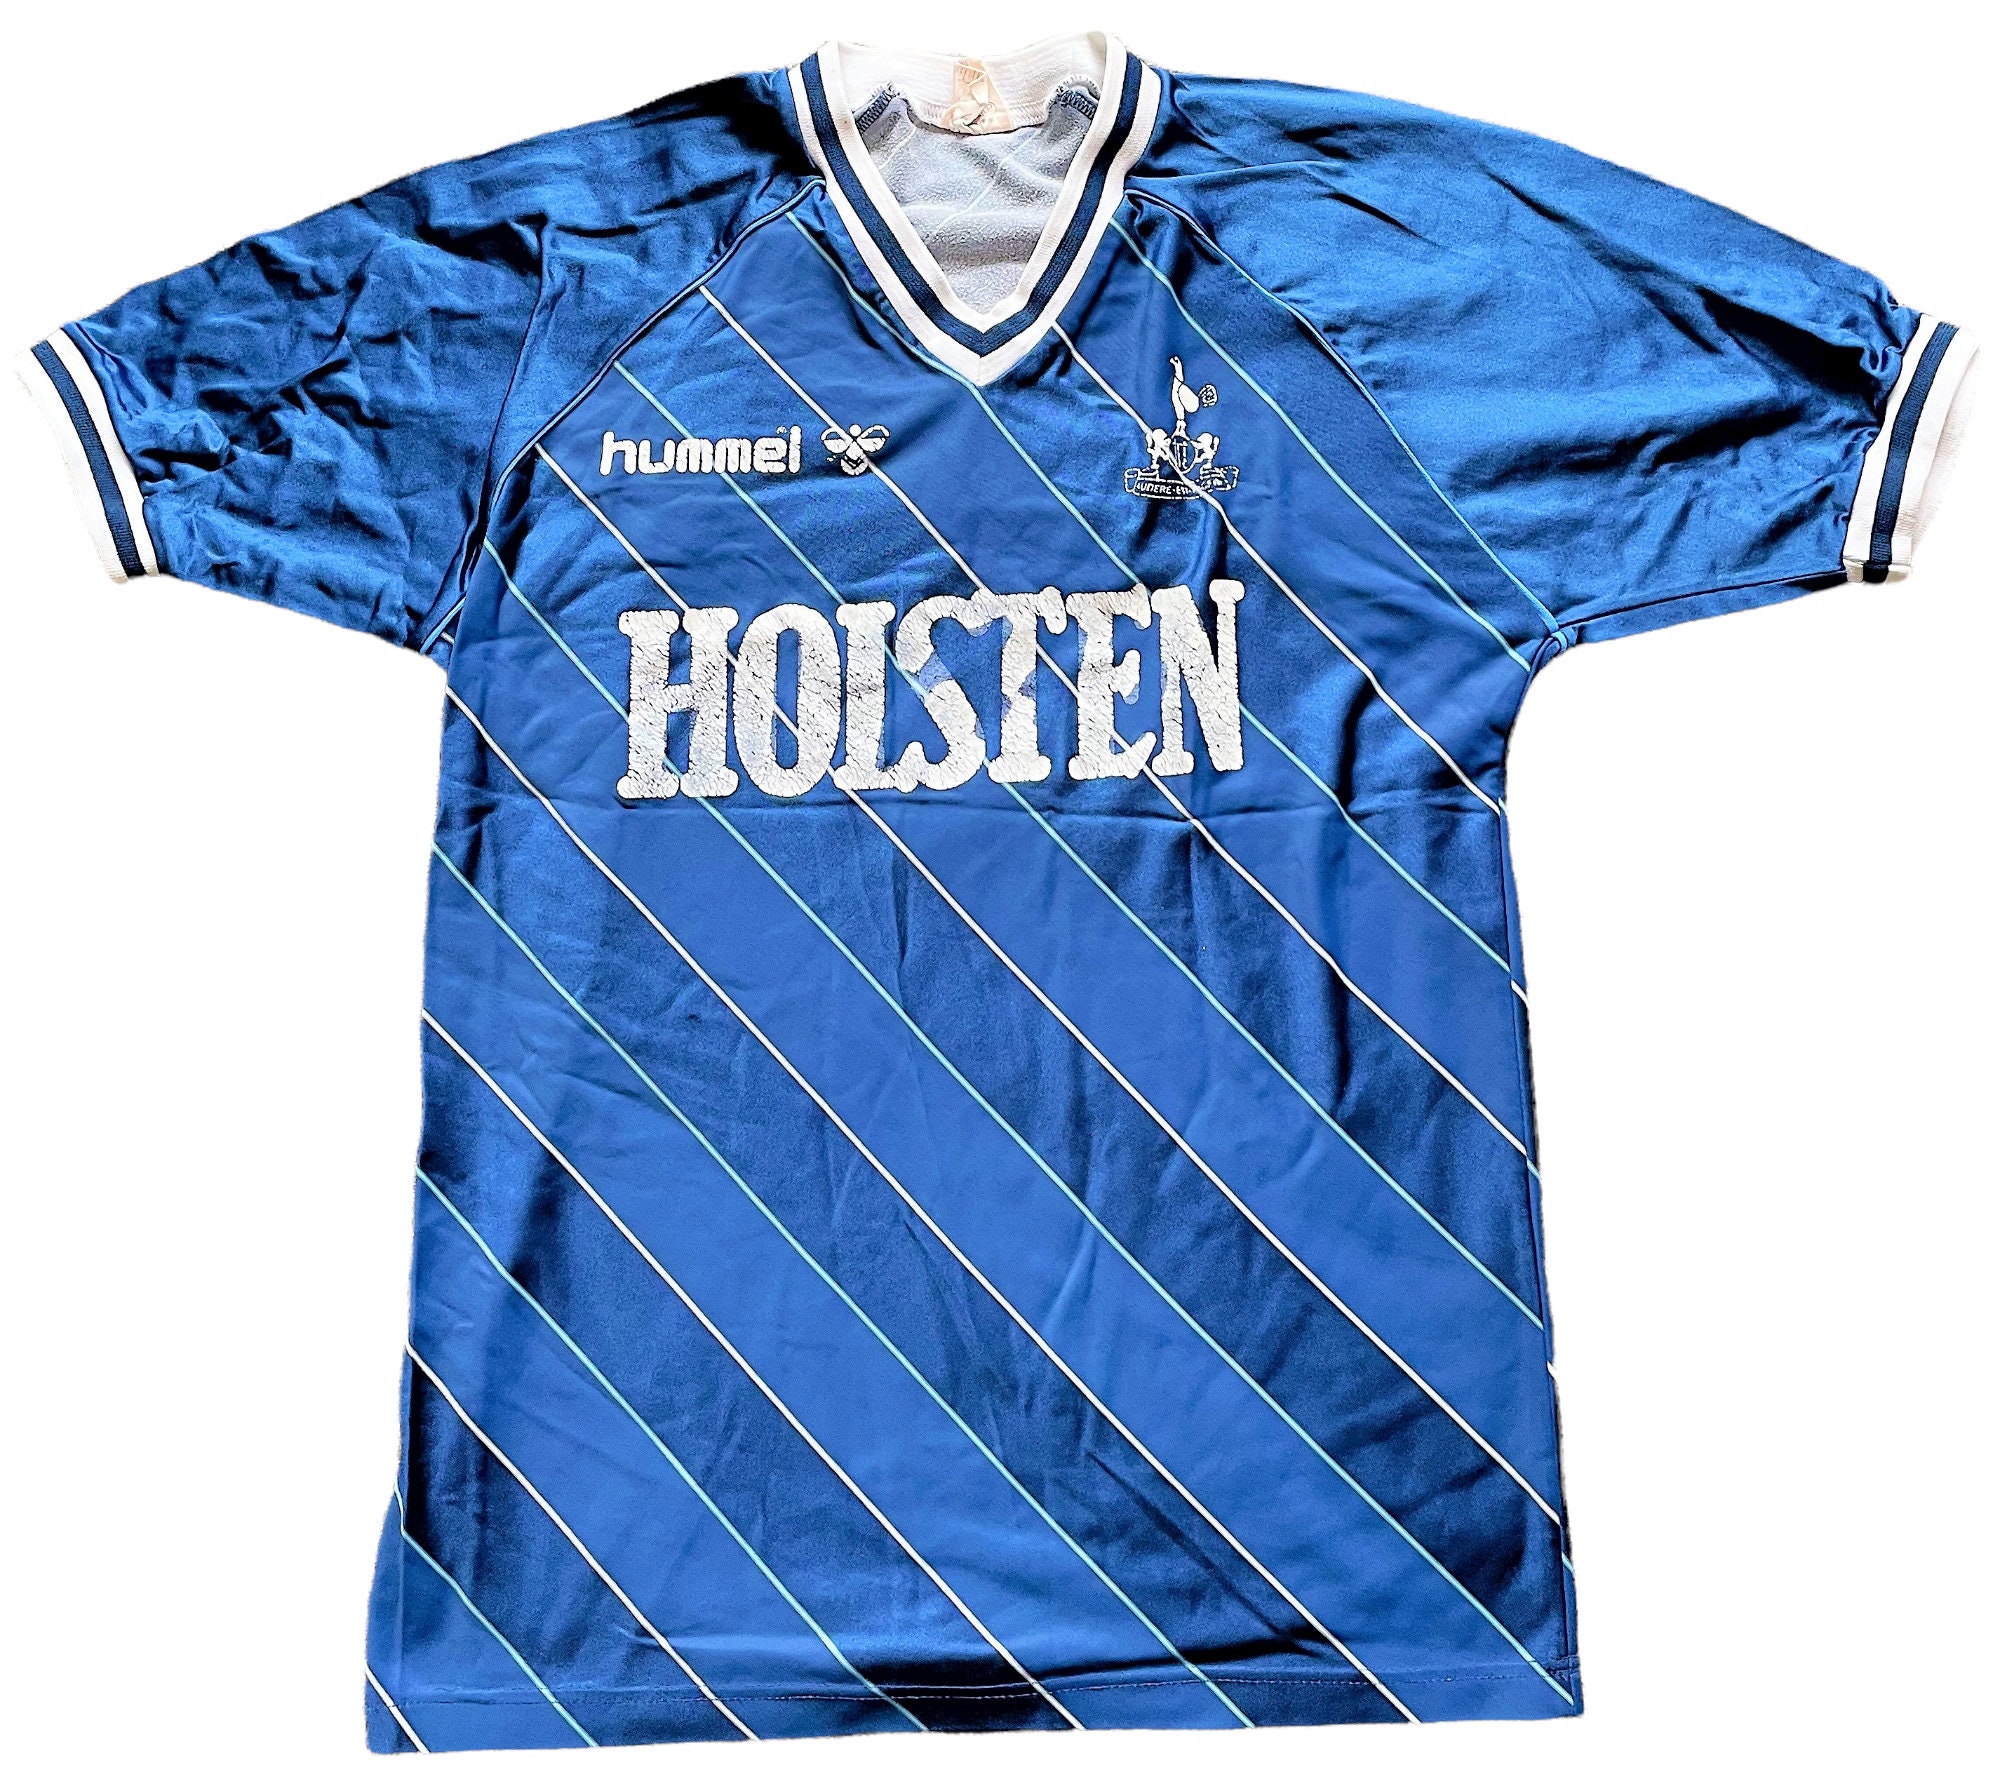 Tottenham Hotspur 1986 Retro Football Shirt